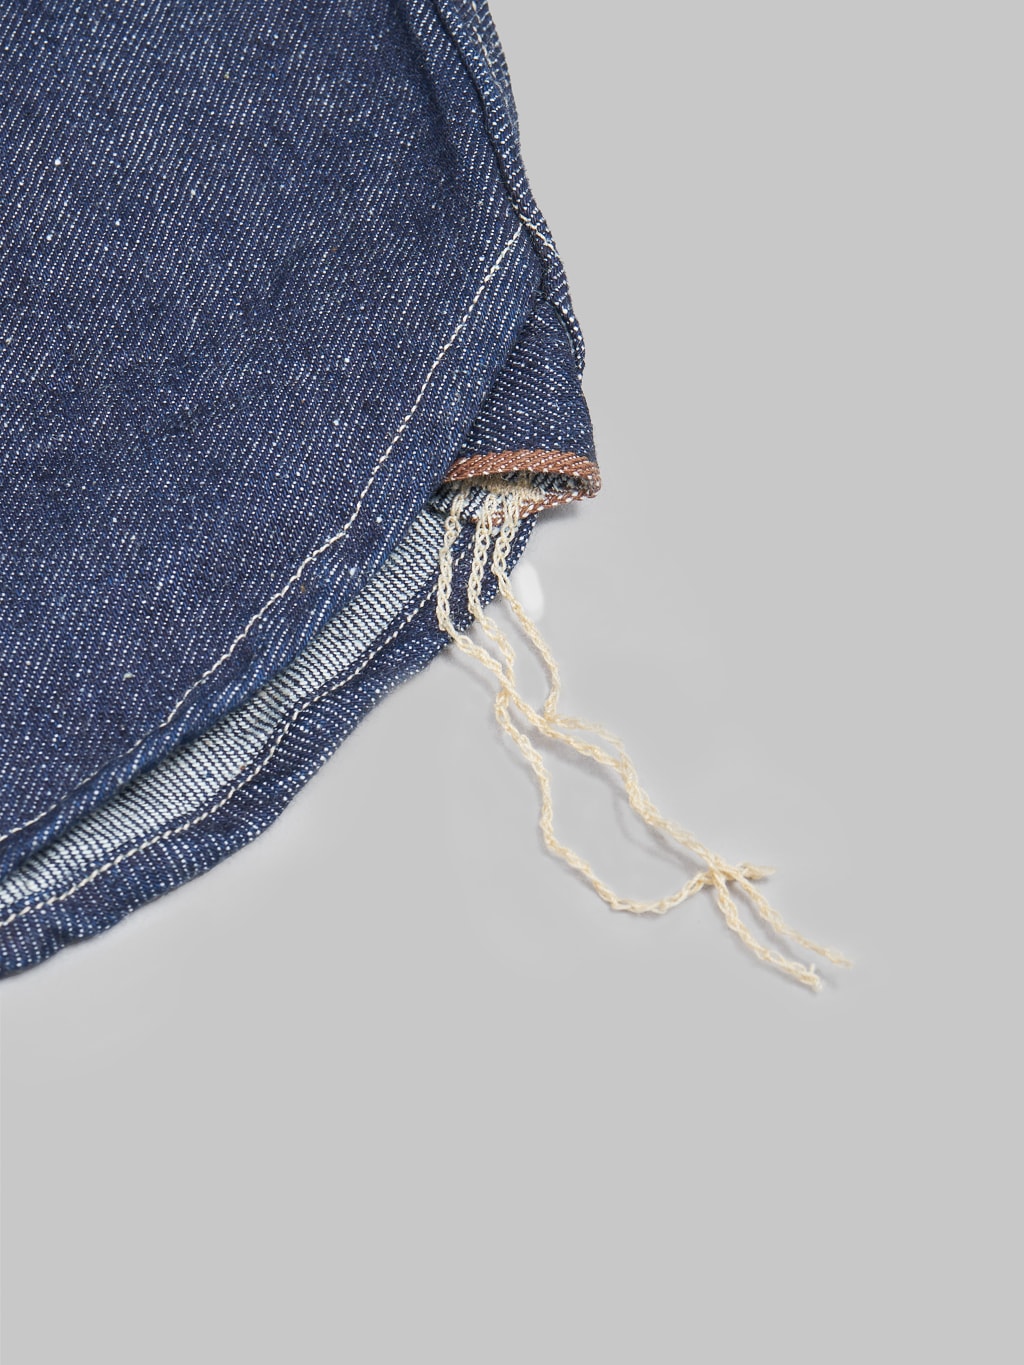 Samurai jeans denim work shirt selvedge gussets